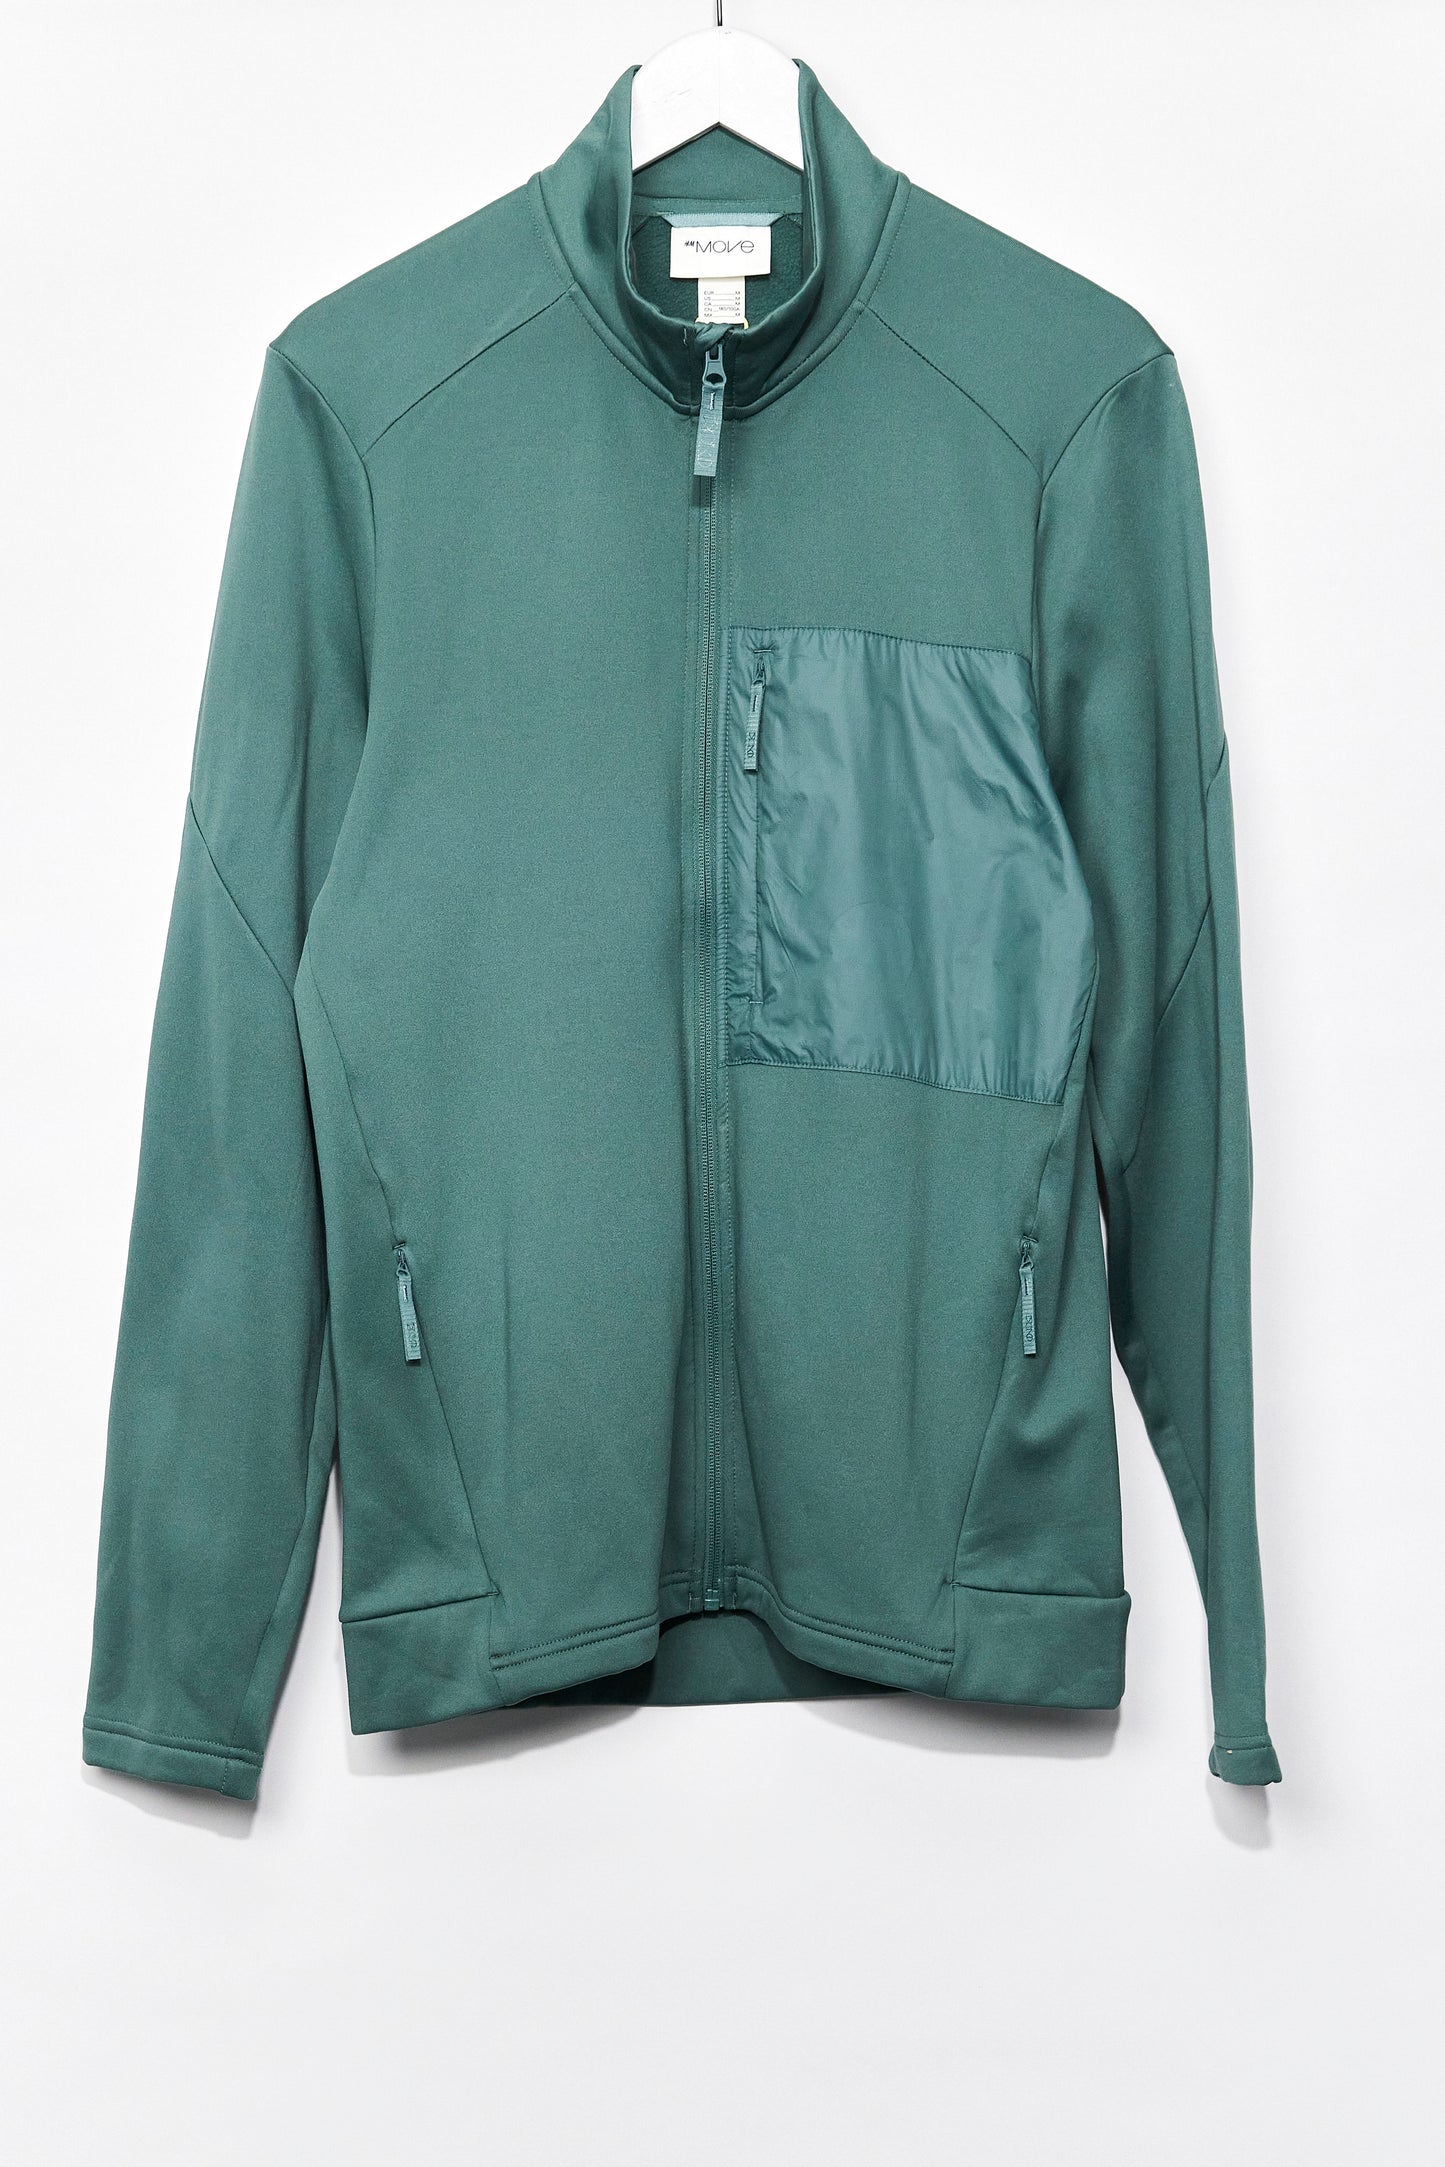 Mens H&M Green Sport Jacket size Medium